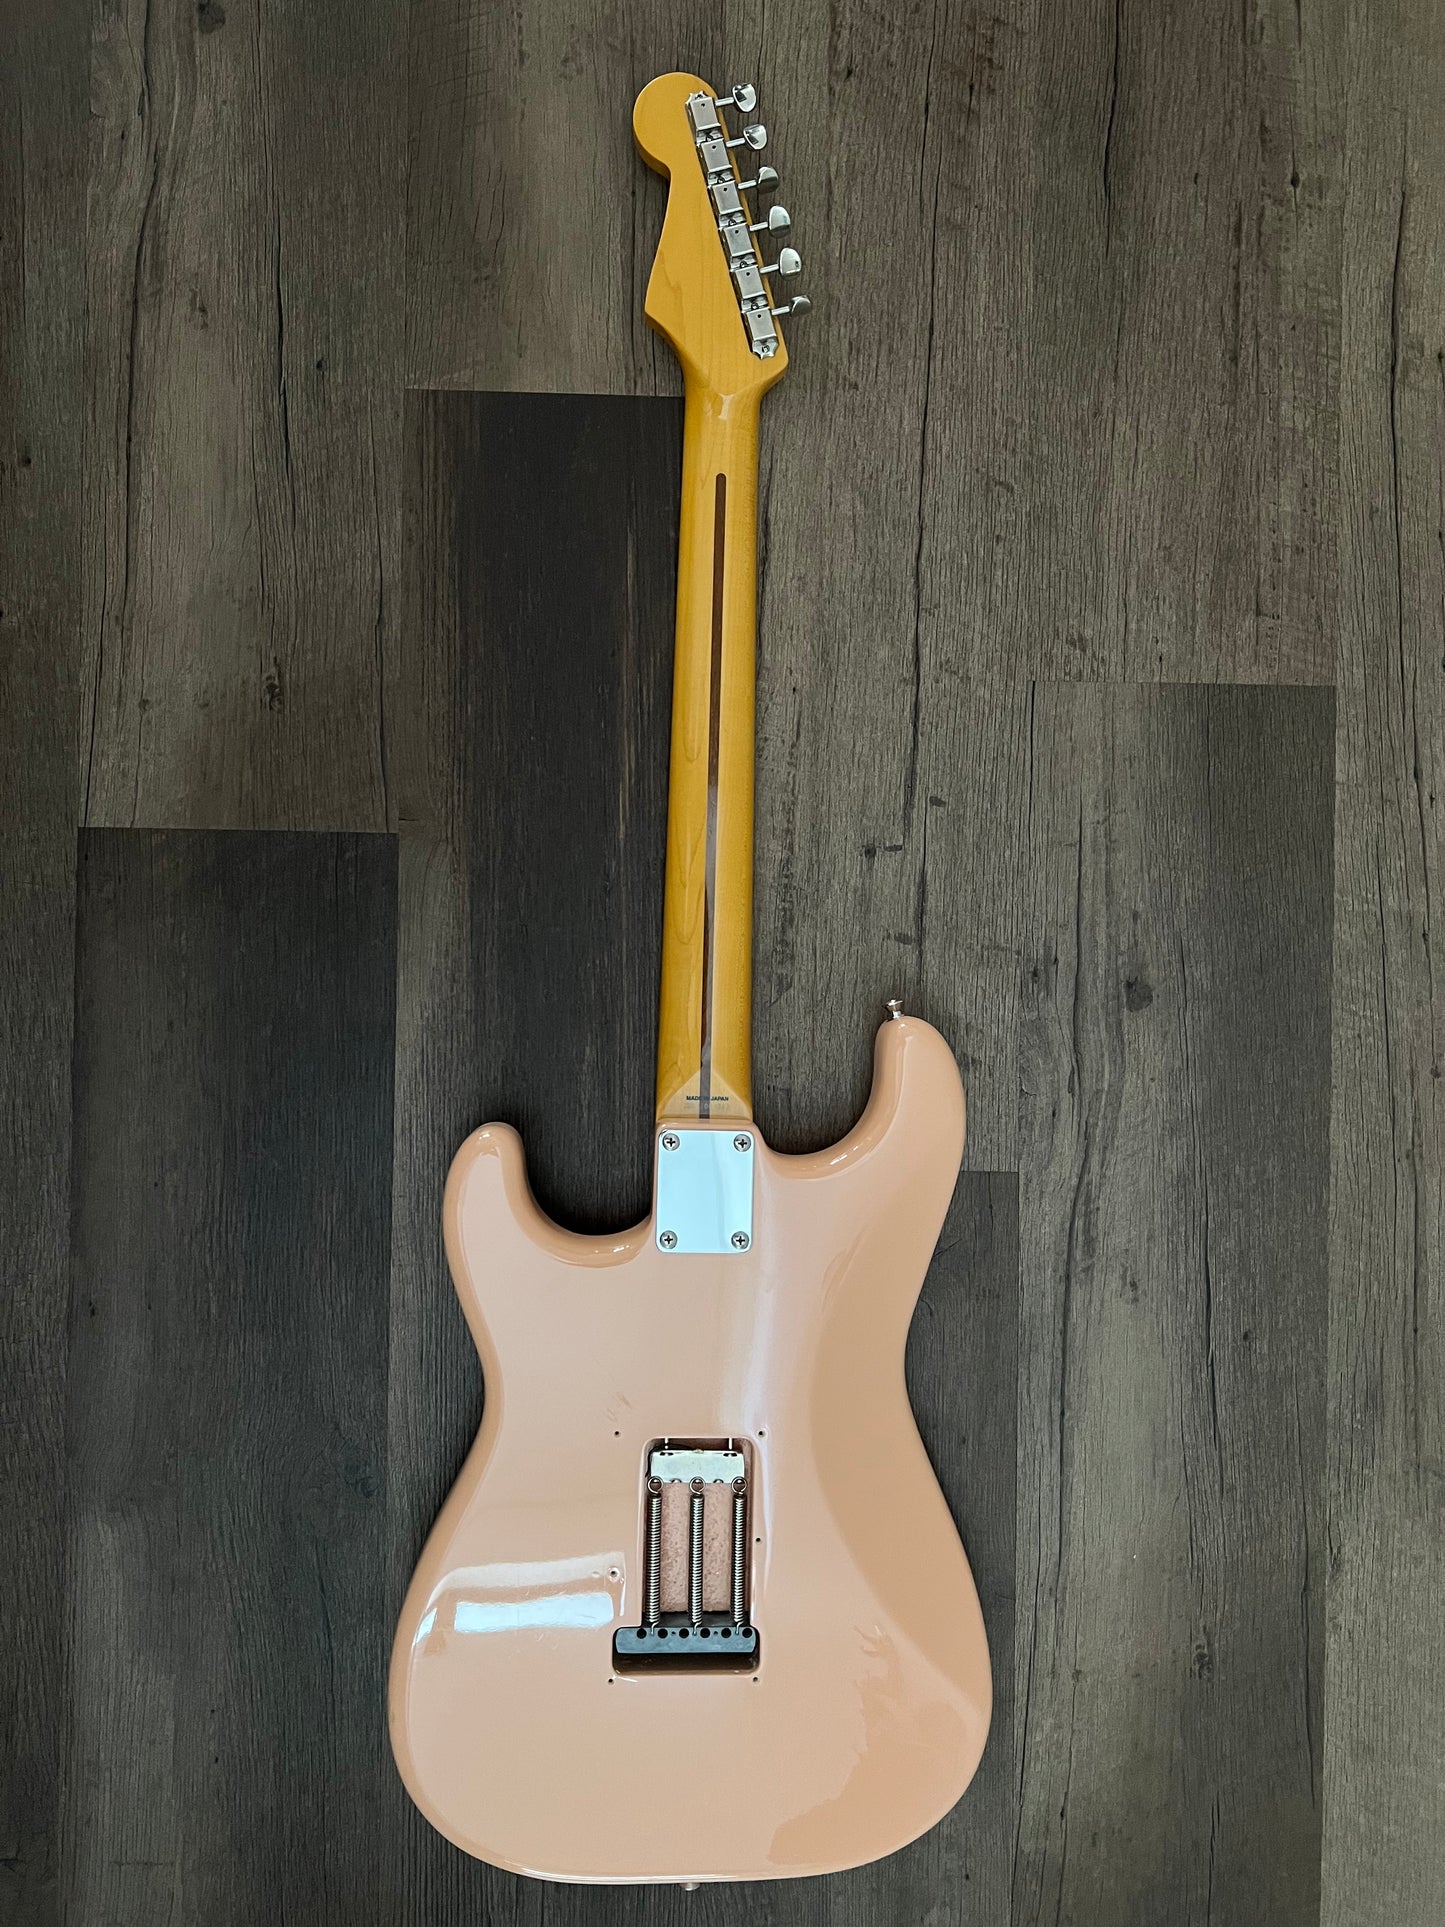 Fender Stratocaster Electric Guitar MIJ 2010